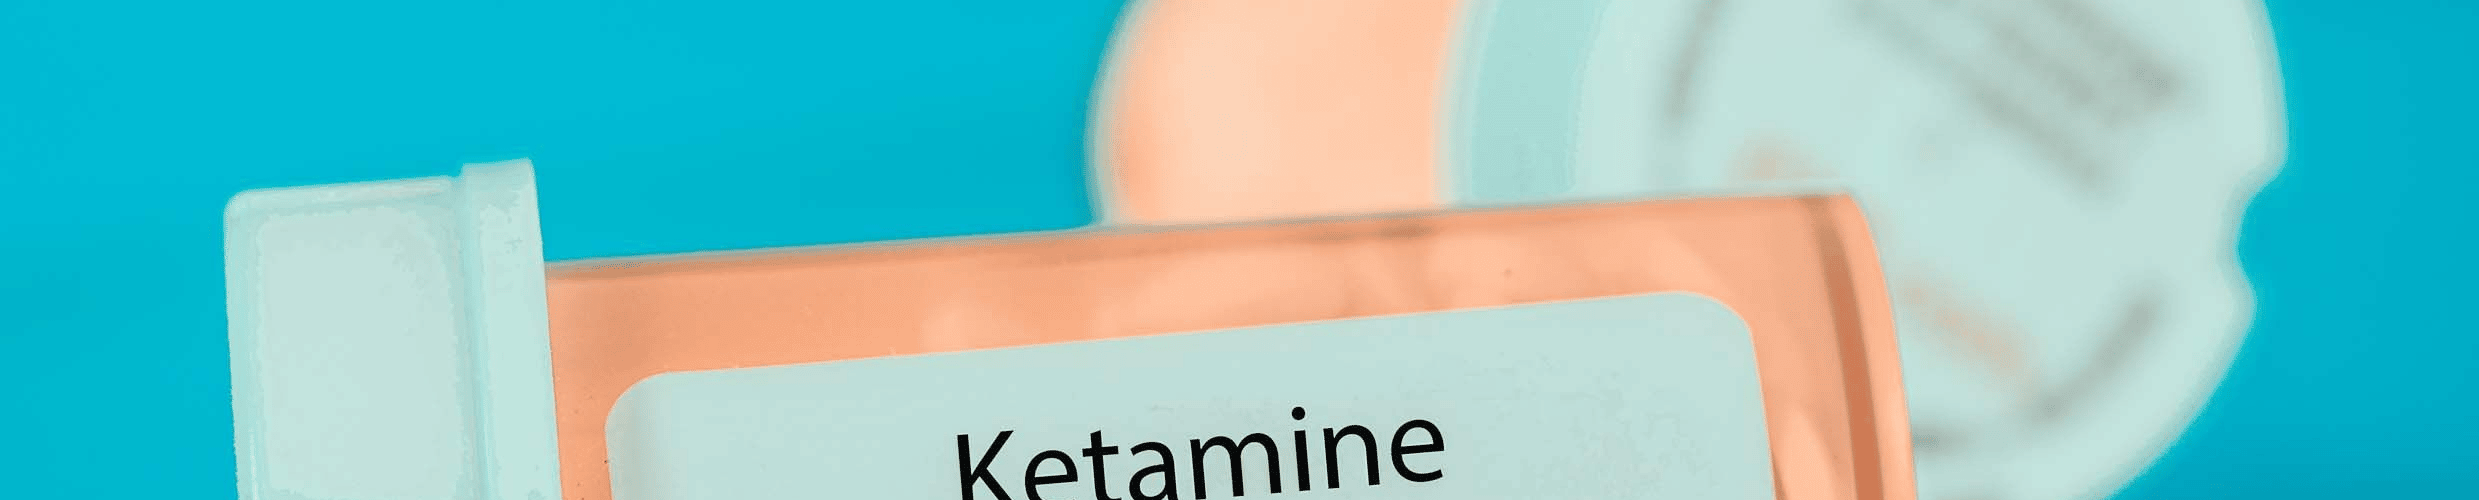 ketamine safety issues